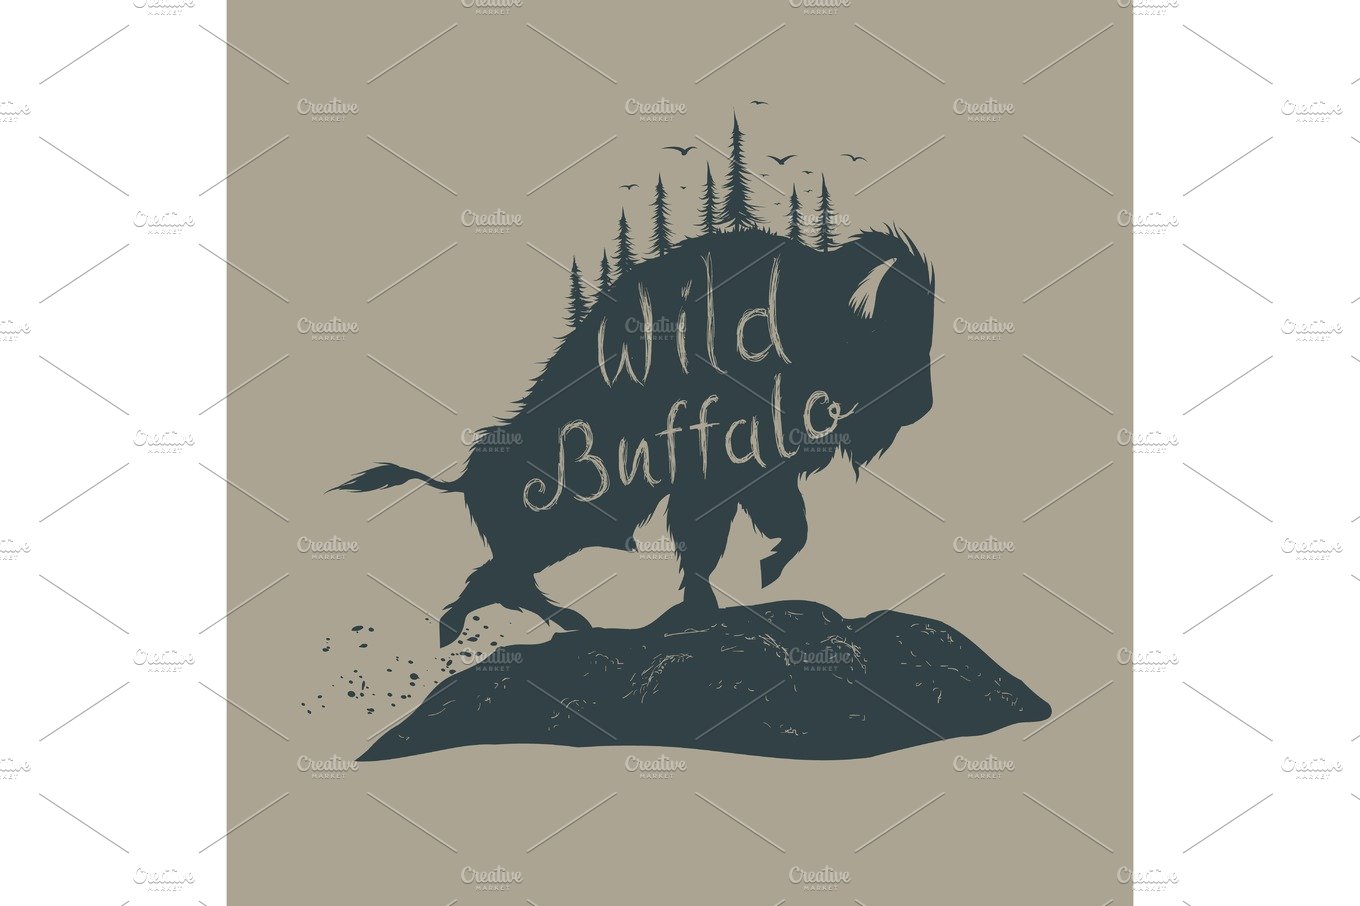 wild buffalo cover image.